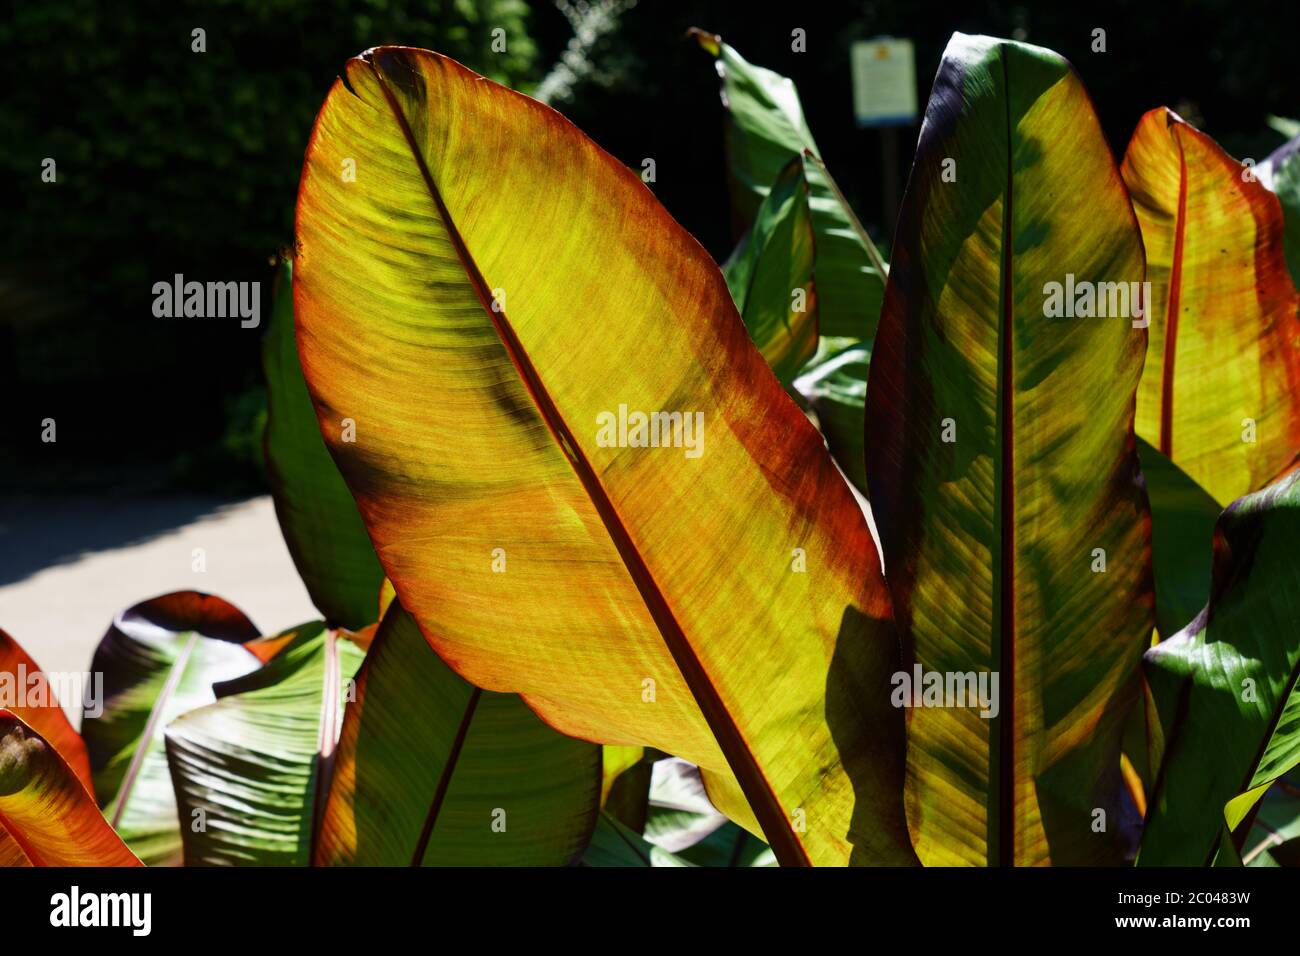 Abyssinian banana plant with sunlit paddle-shaped leaves, Harrogate, North Yorkshire, England, UK. Stock Photo